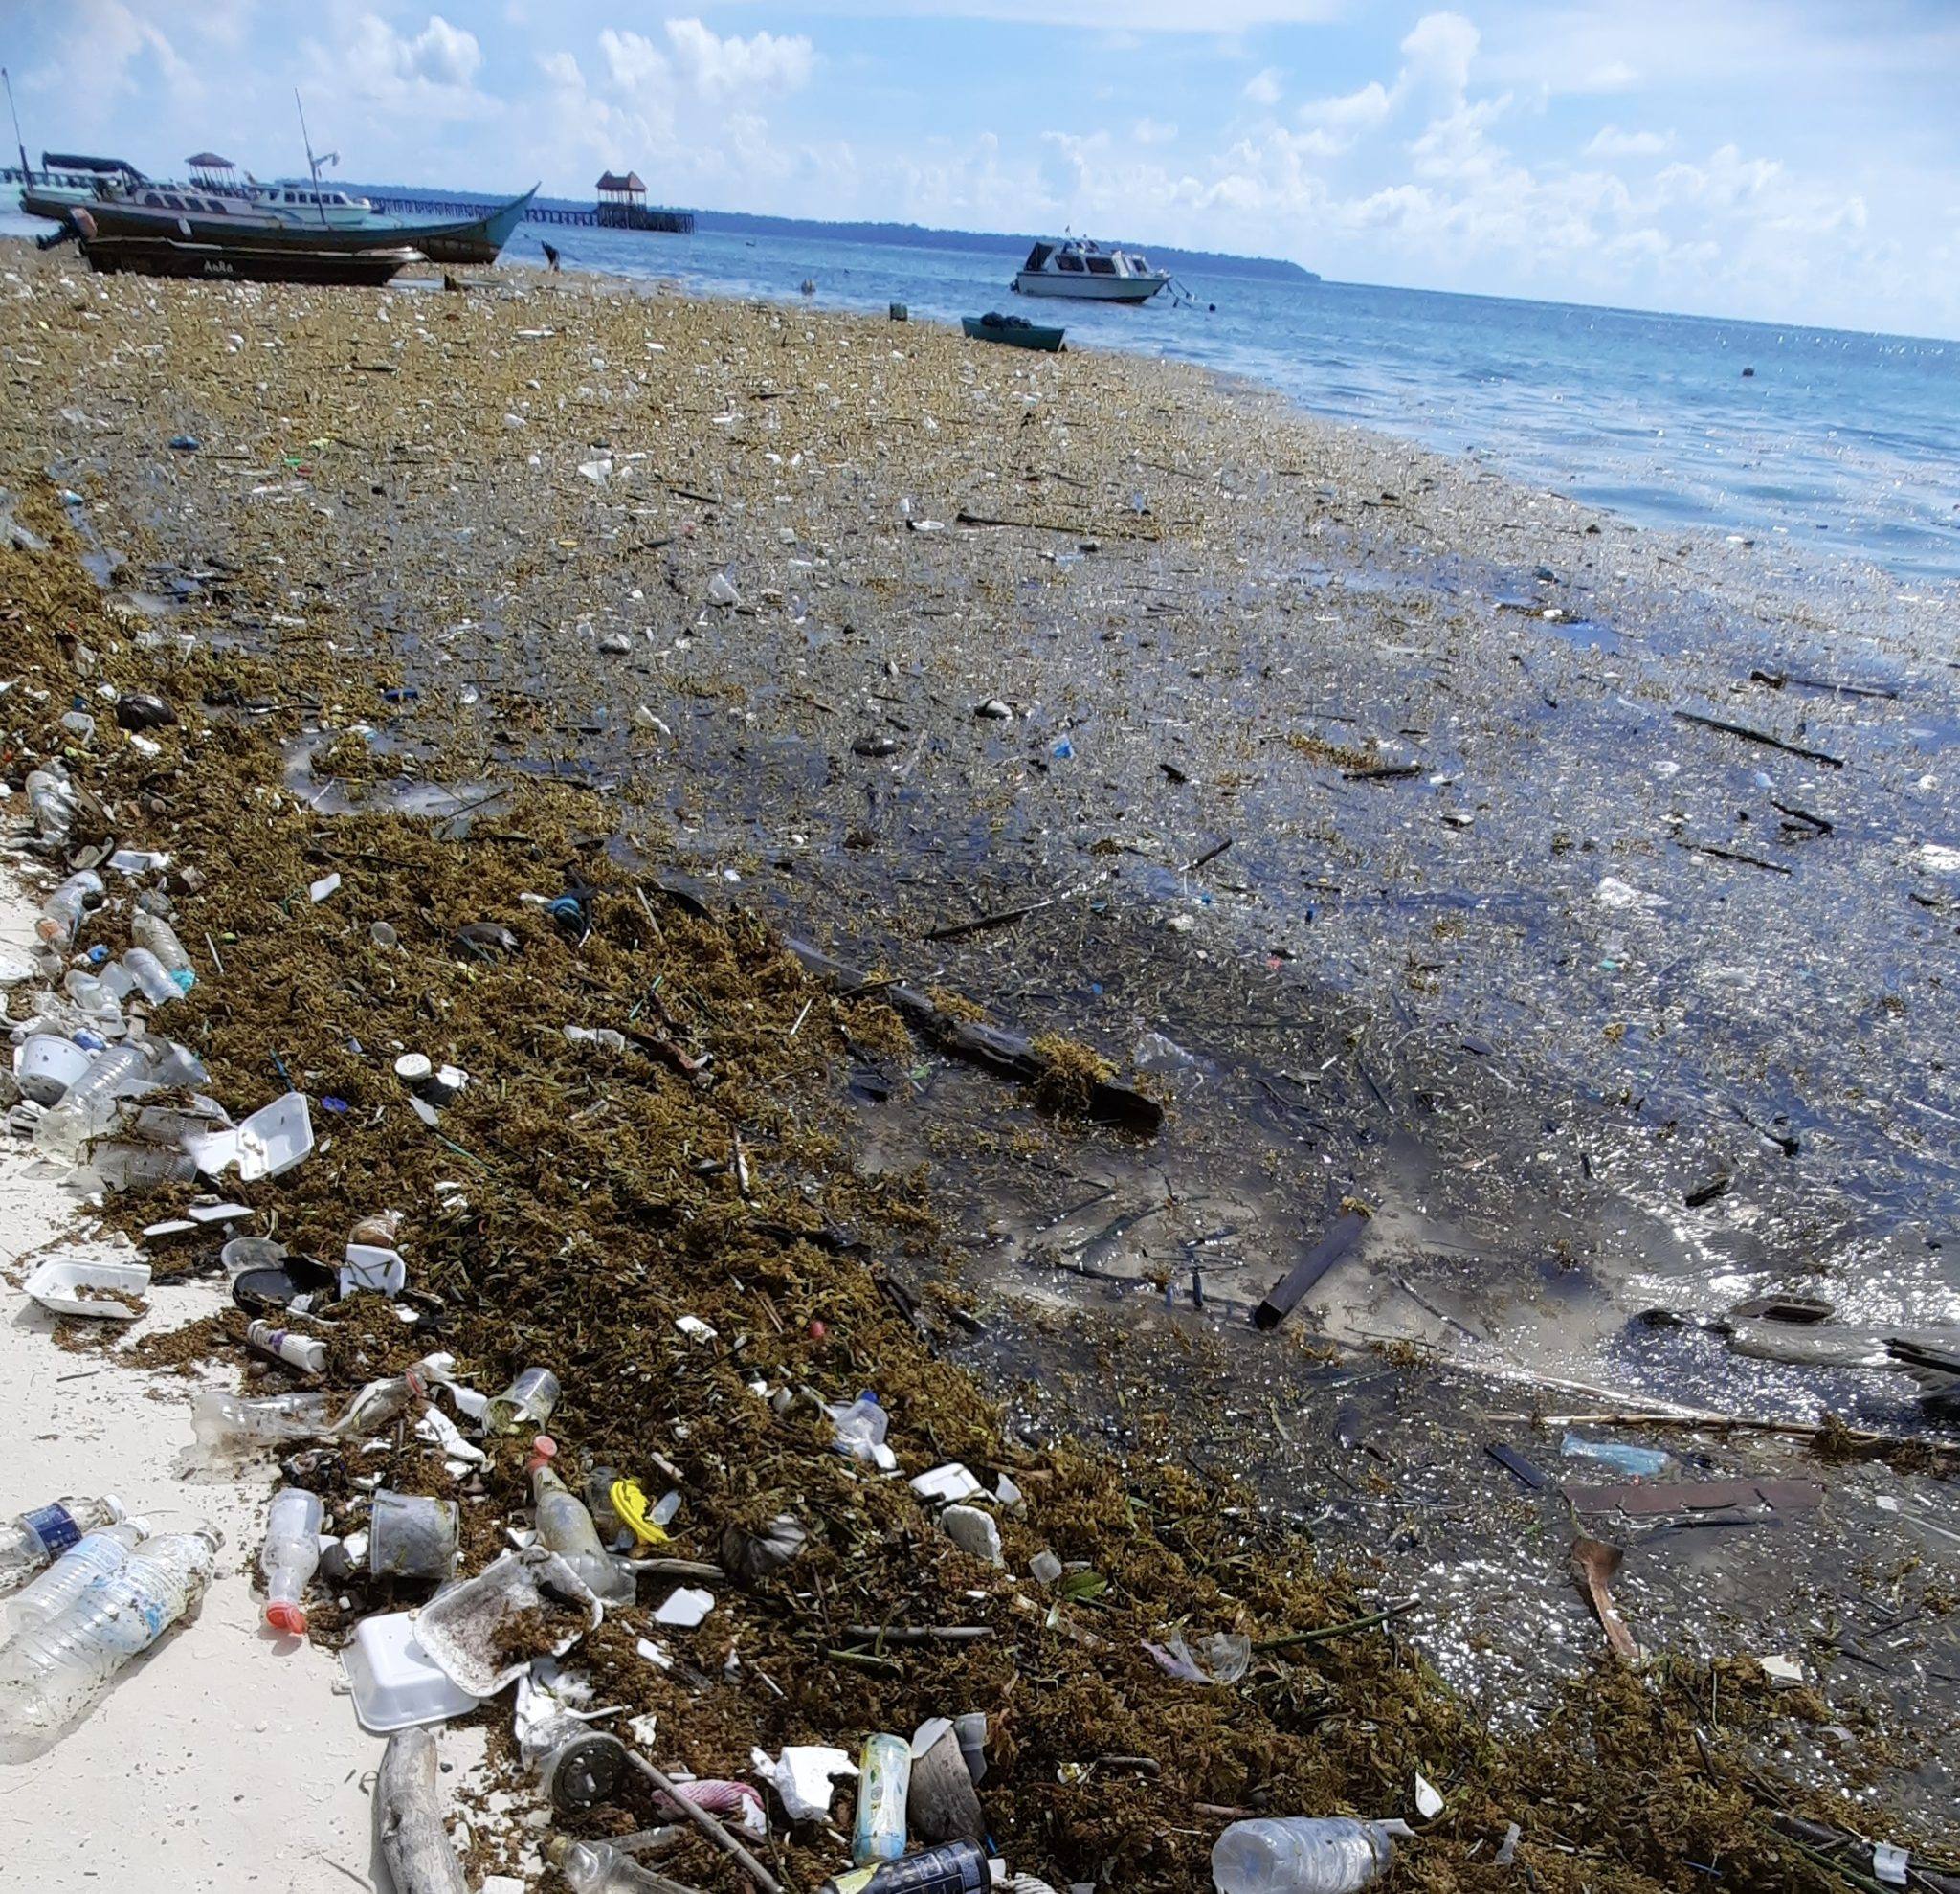 Sampah Kiriman Mulai Menepi di Pulau Maratua, Plastik hingga Batang Pohon Berserakan